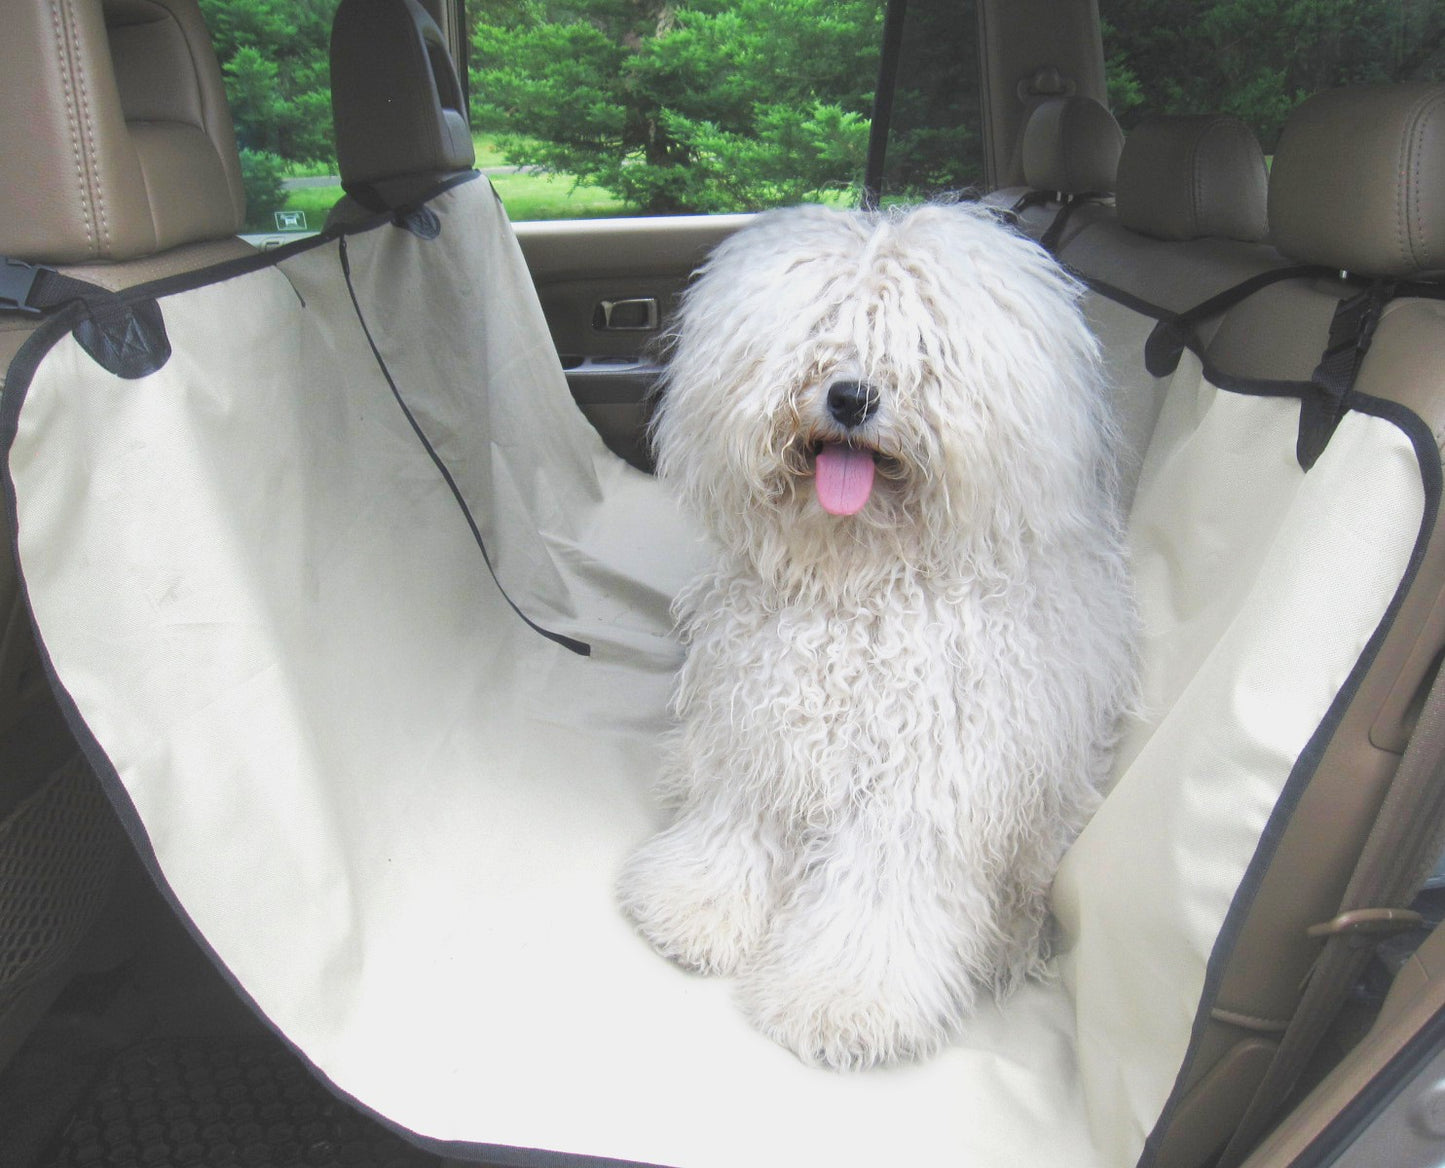 Heavy Duty Dog Car Seat Cover Hammock